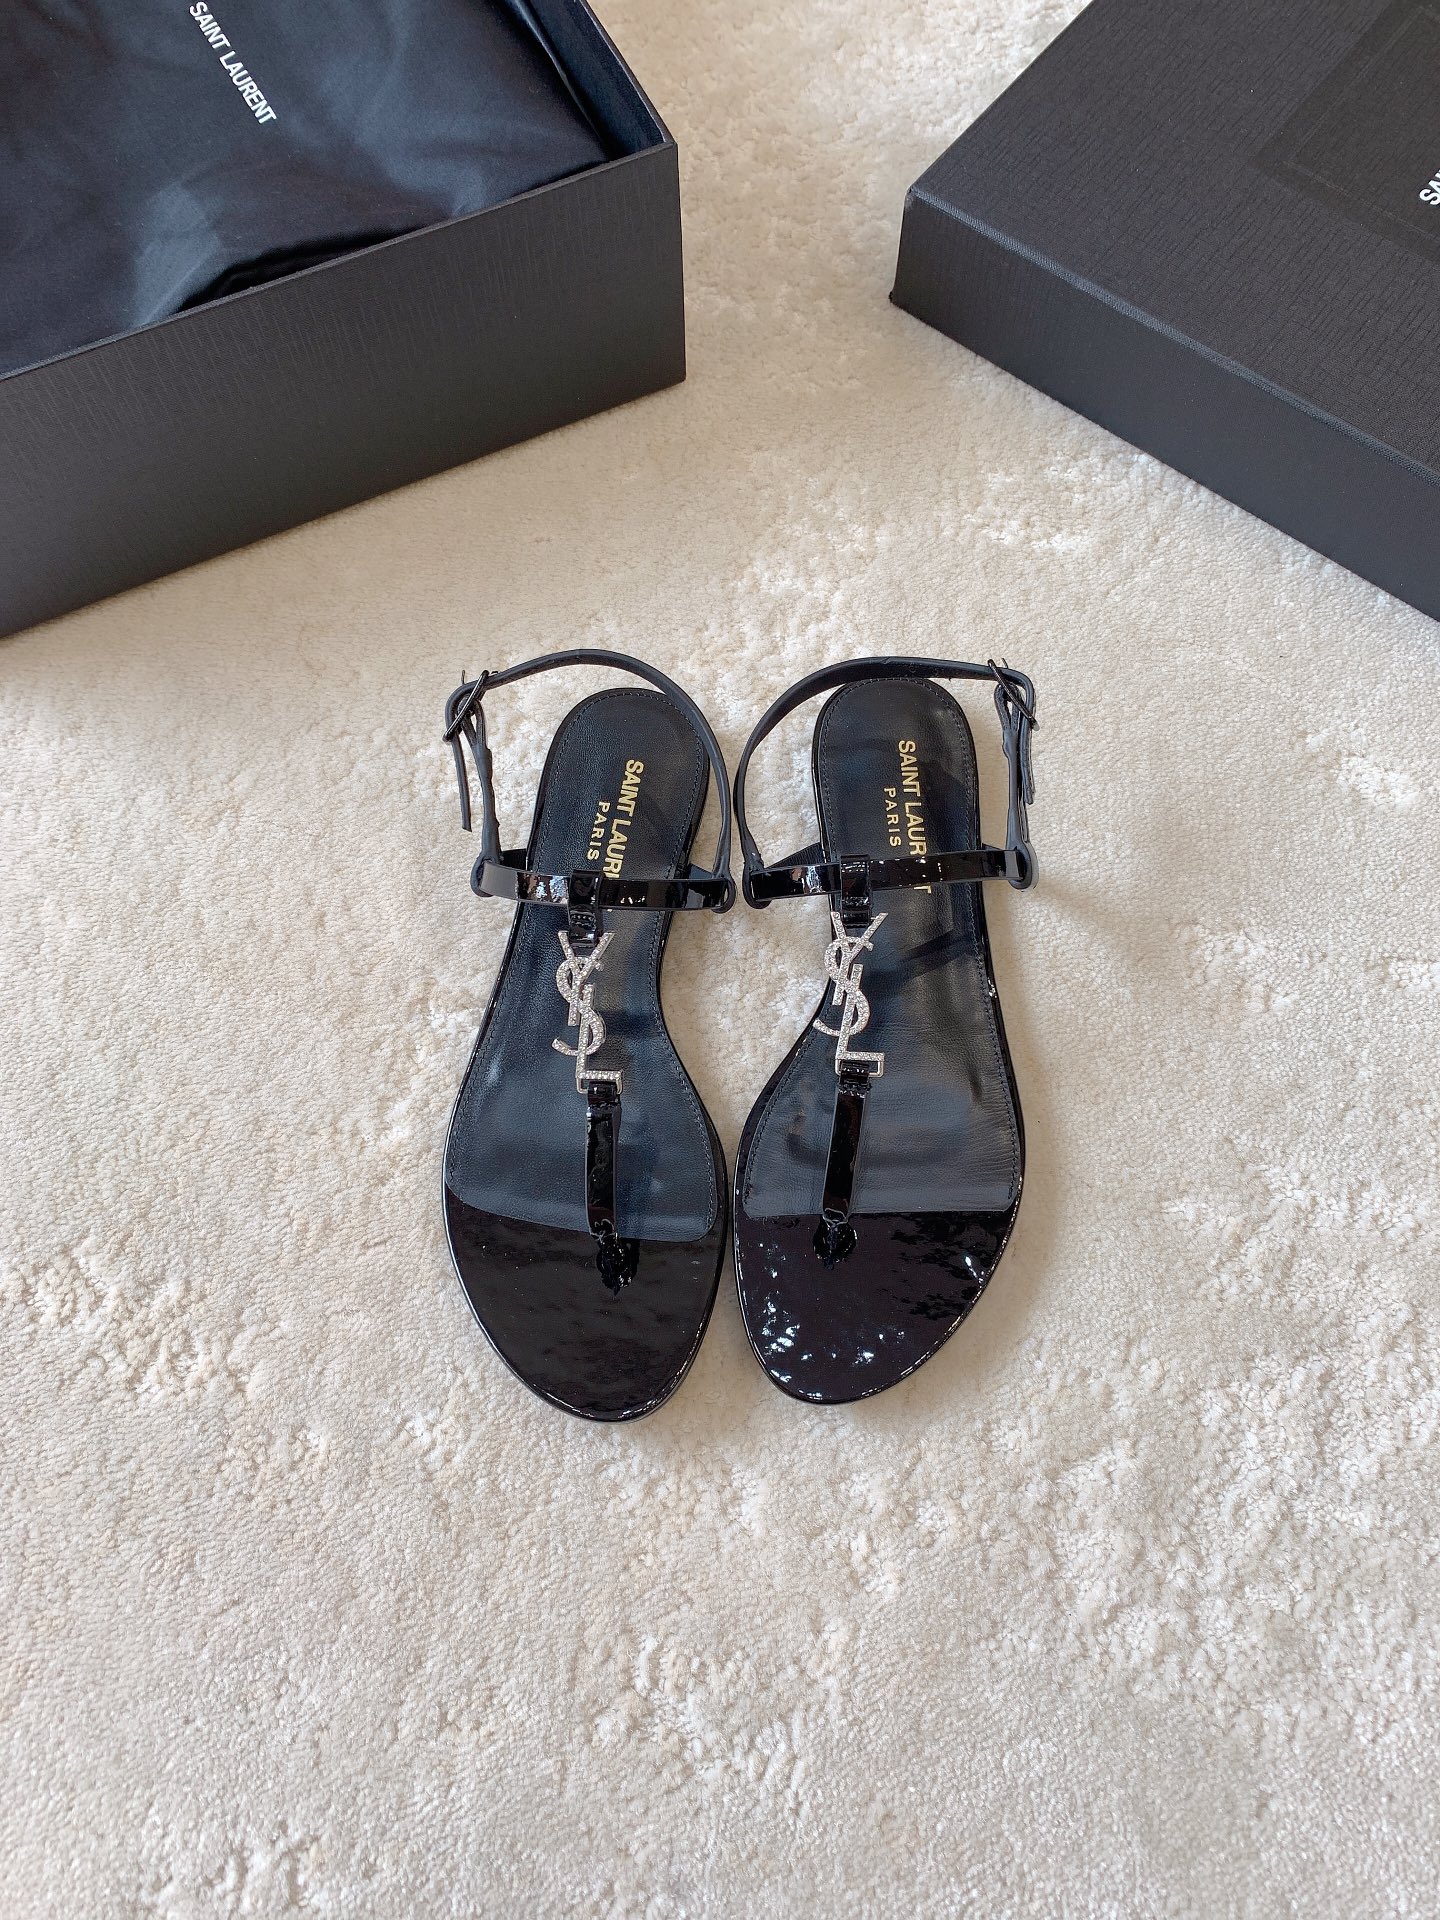 Yves Saint Laurent Zapatos Sandalias AAAA personalizar
 Negro Dermis Laca Piel de oveja